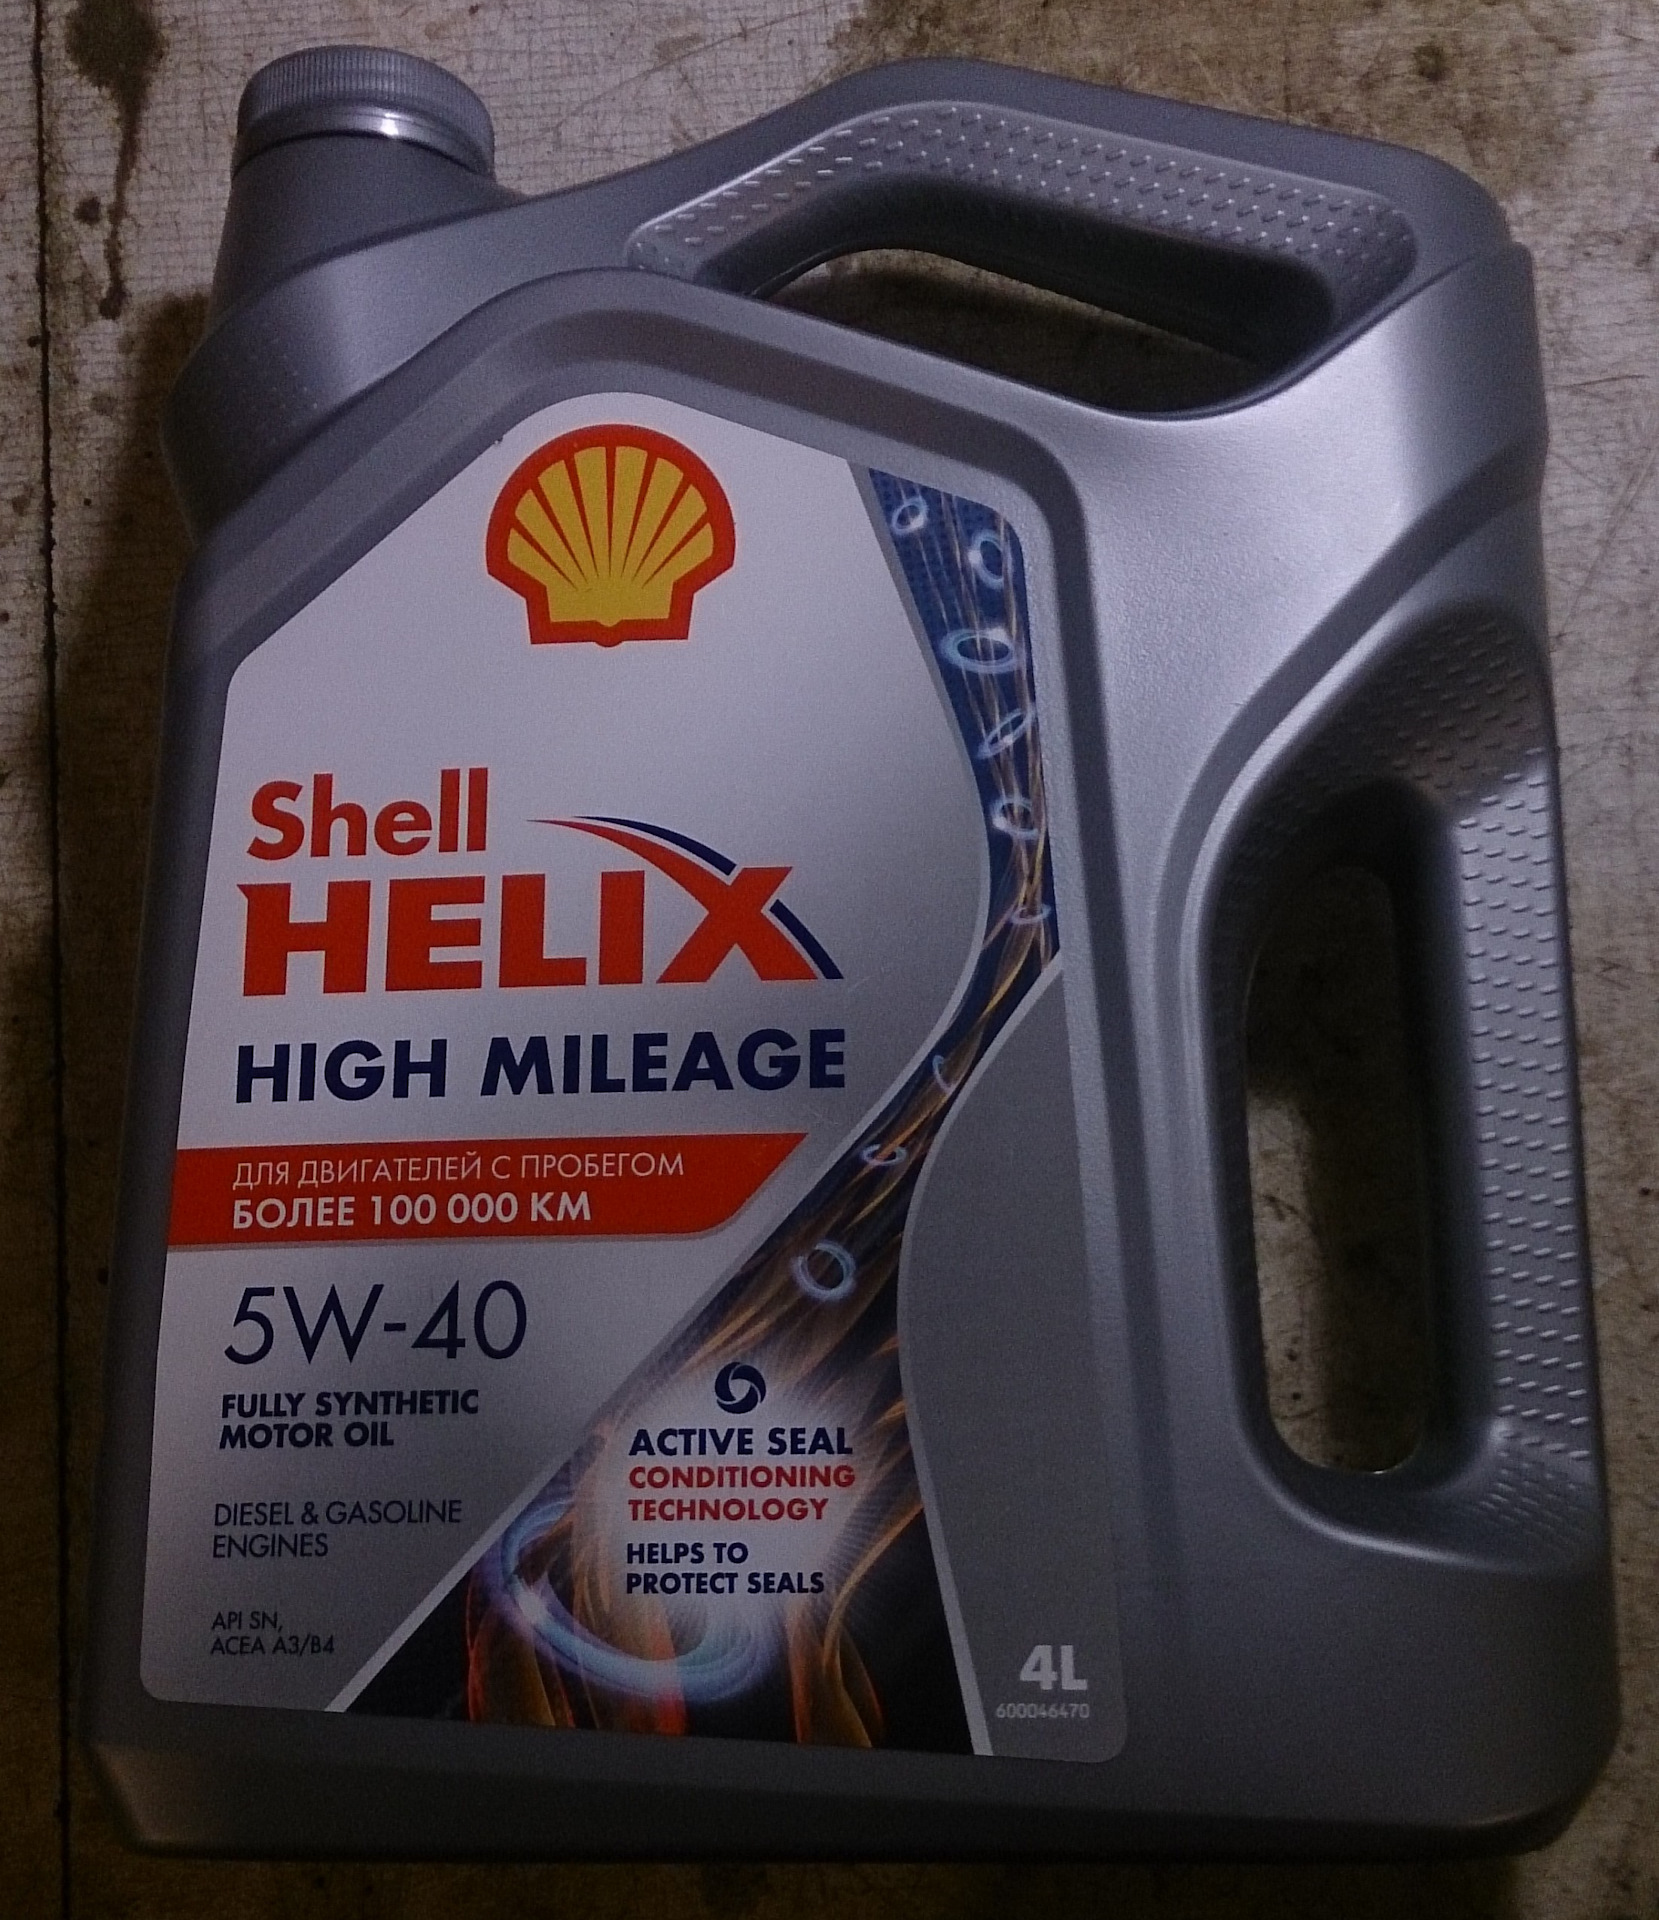 Helix high mileage. Shell Helix Mileage 5w-40. Helix Ultra 5w-40. Shell High Mileage 5w40. Shell Helix Ultra 5w40 High Mileage.